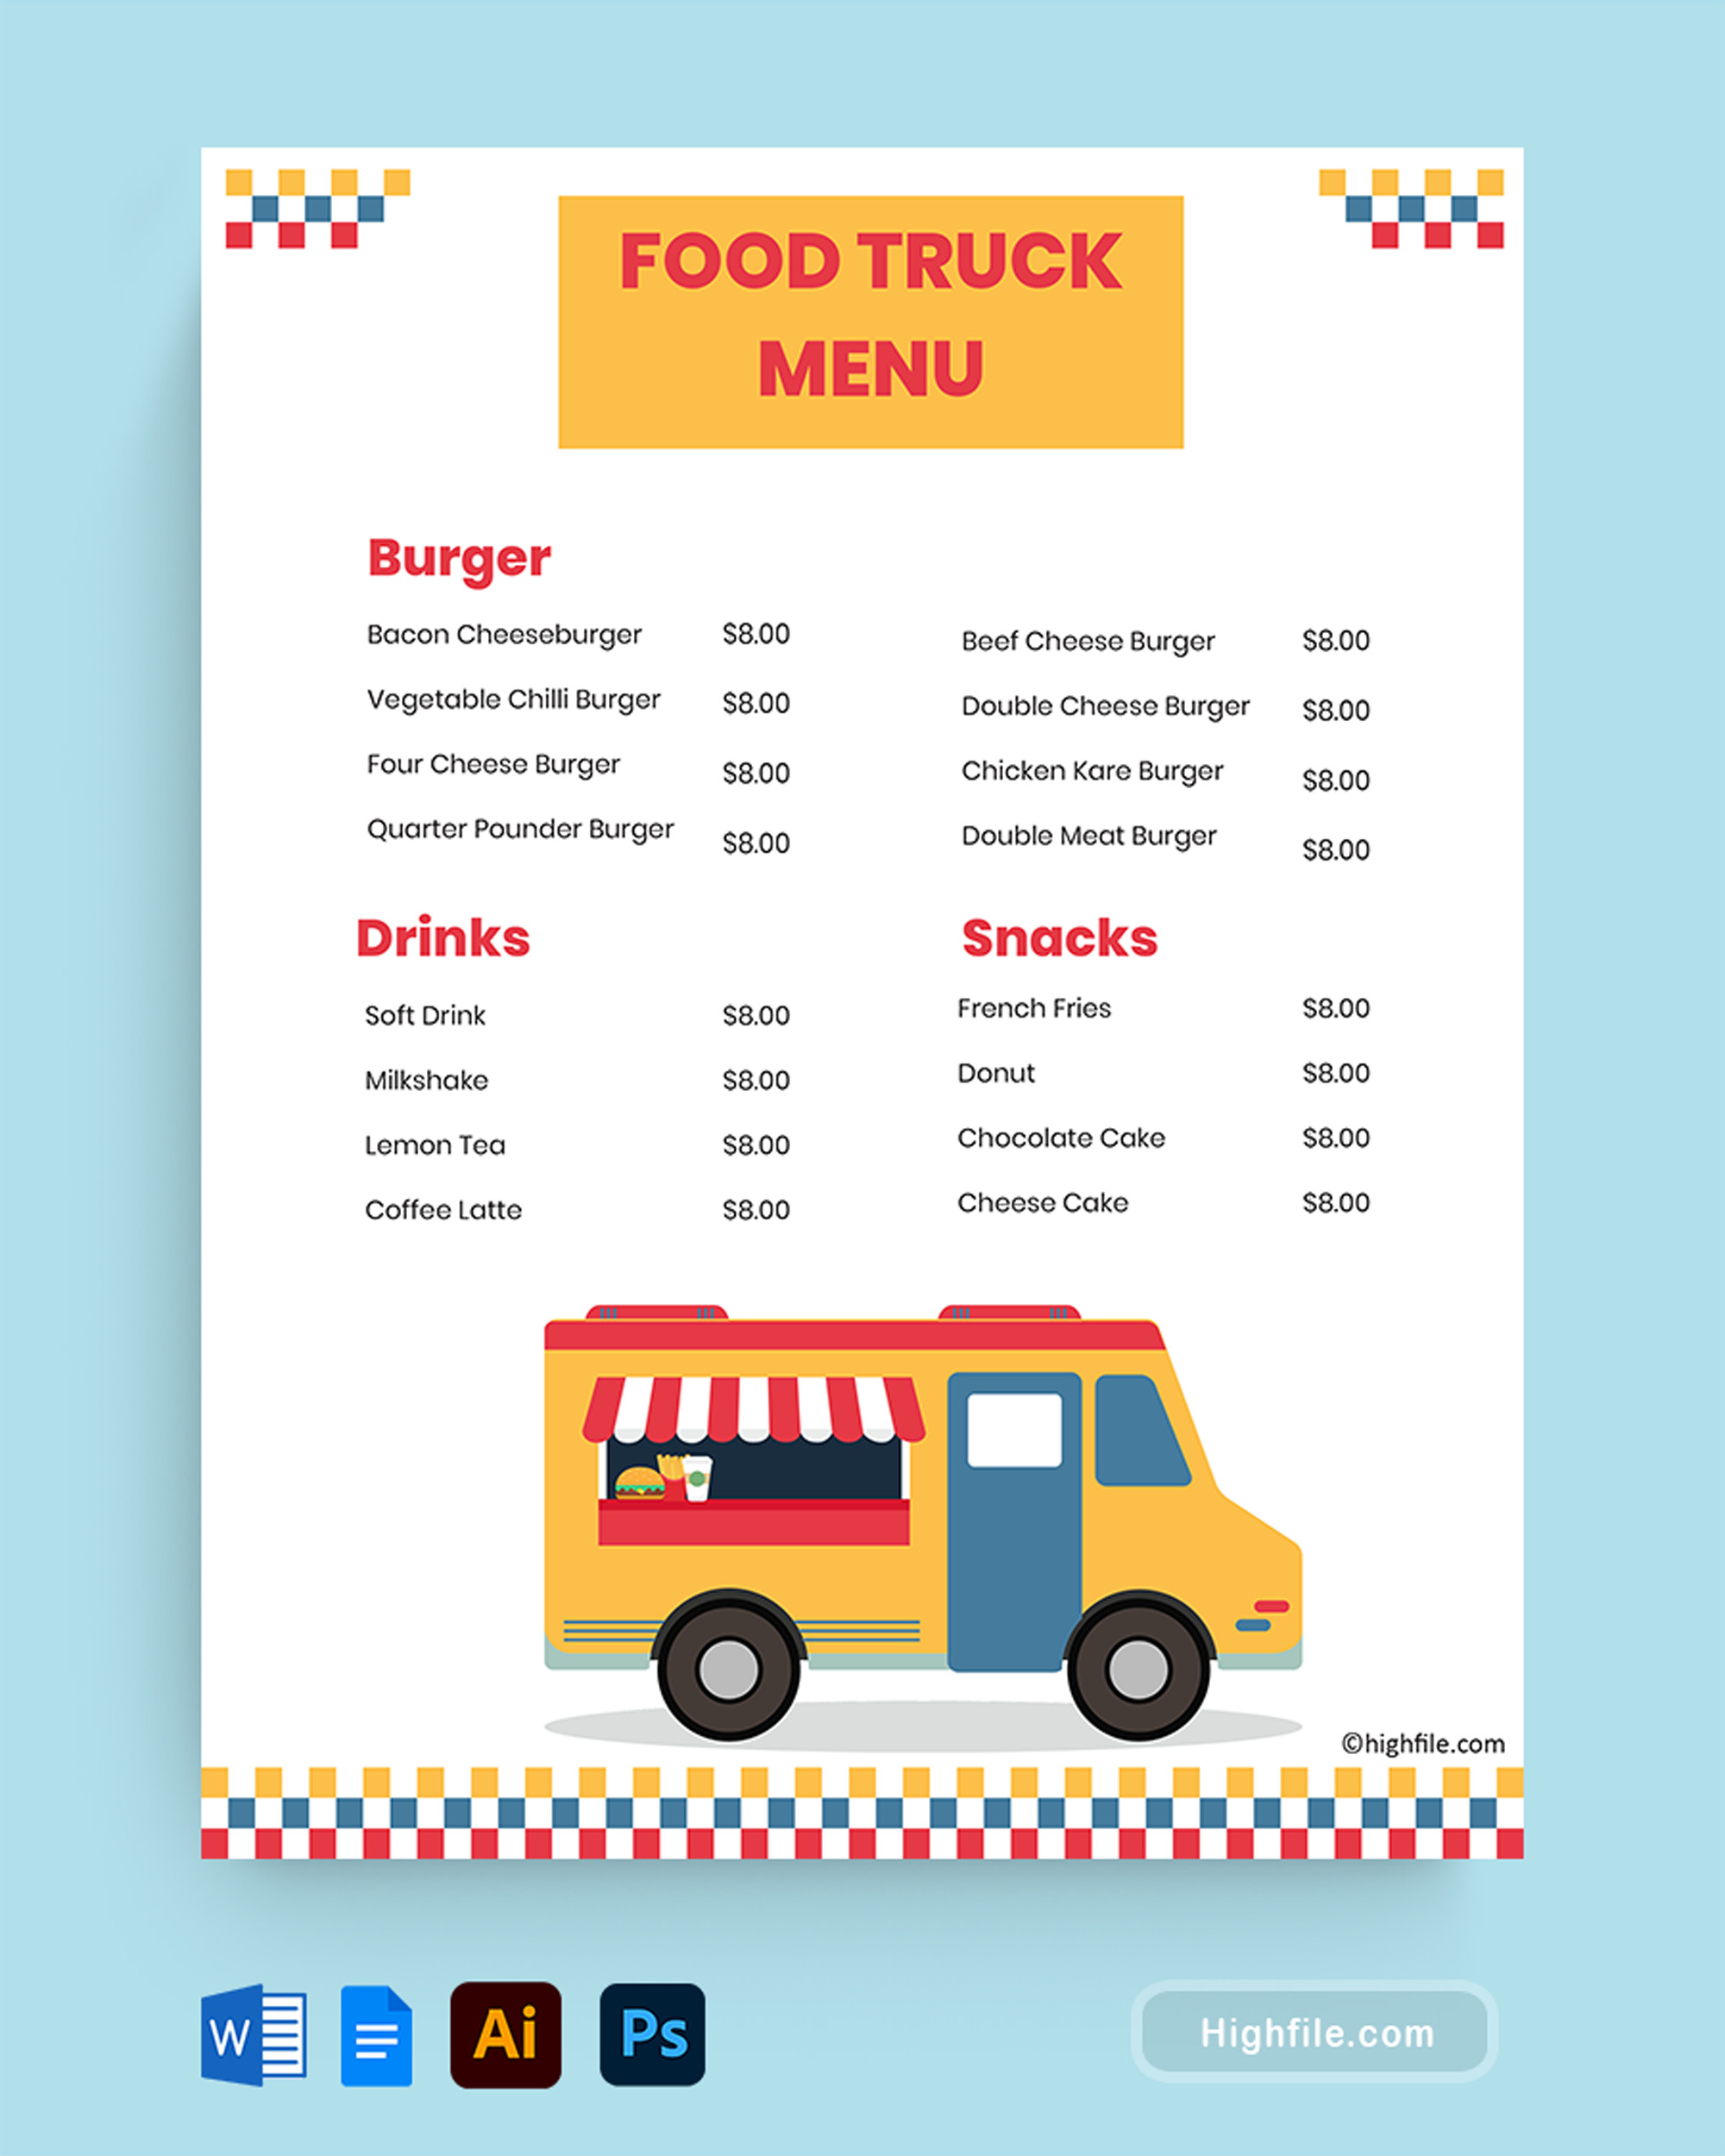 Blank Food Truck Menu Template - Word, Google Docs, Adobe Illustrator, Adobe Photoshop